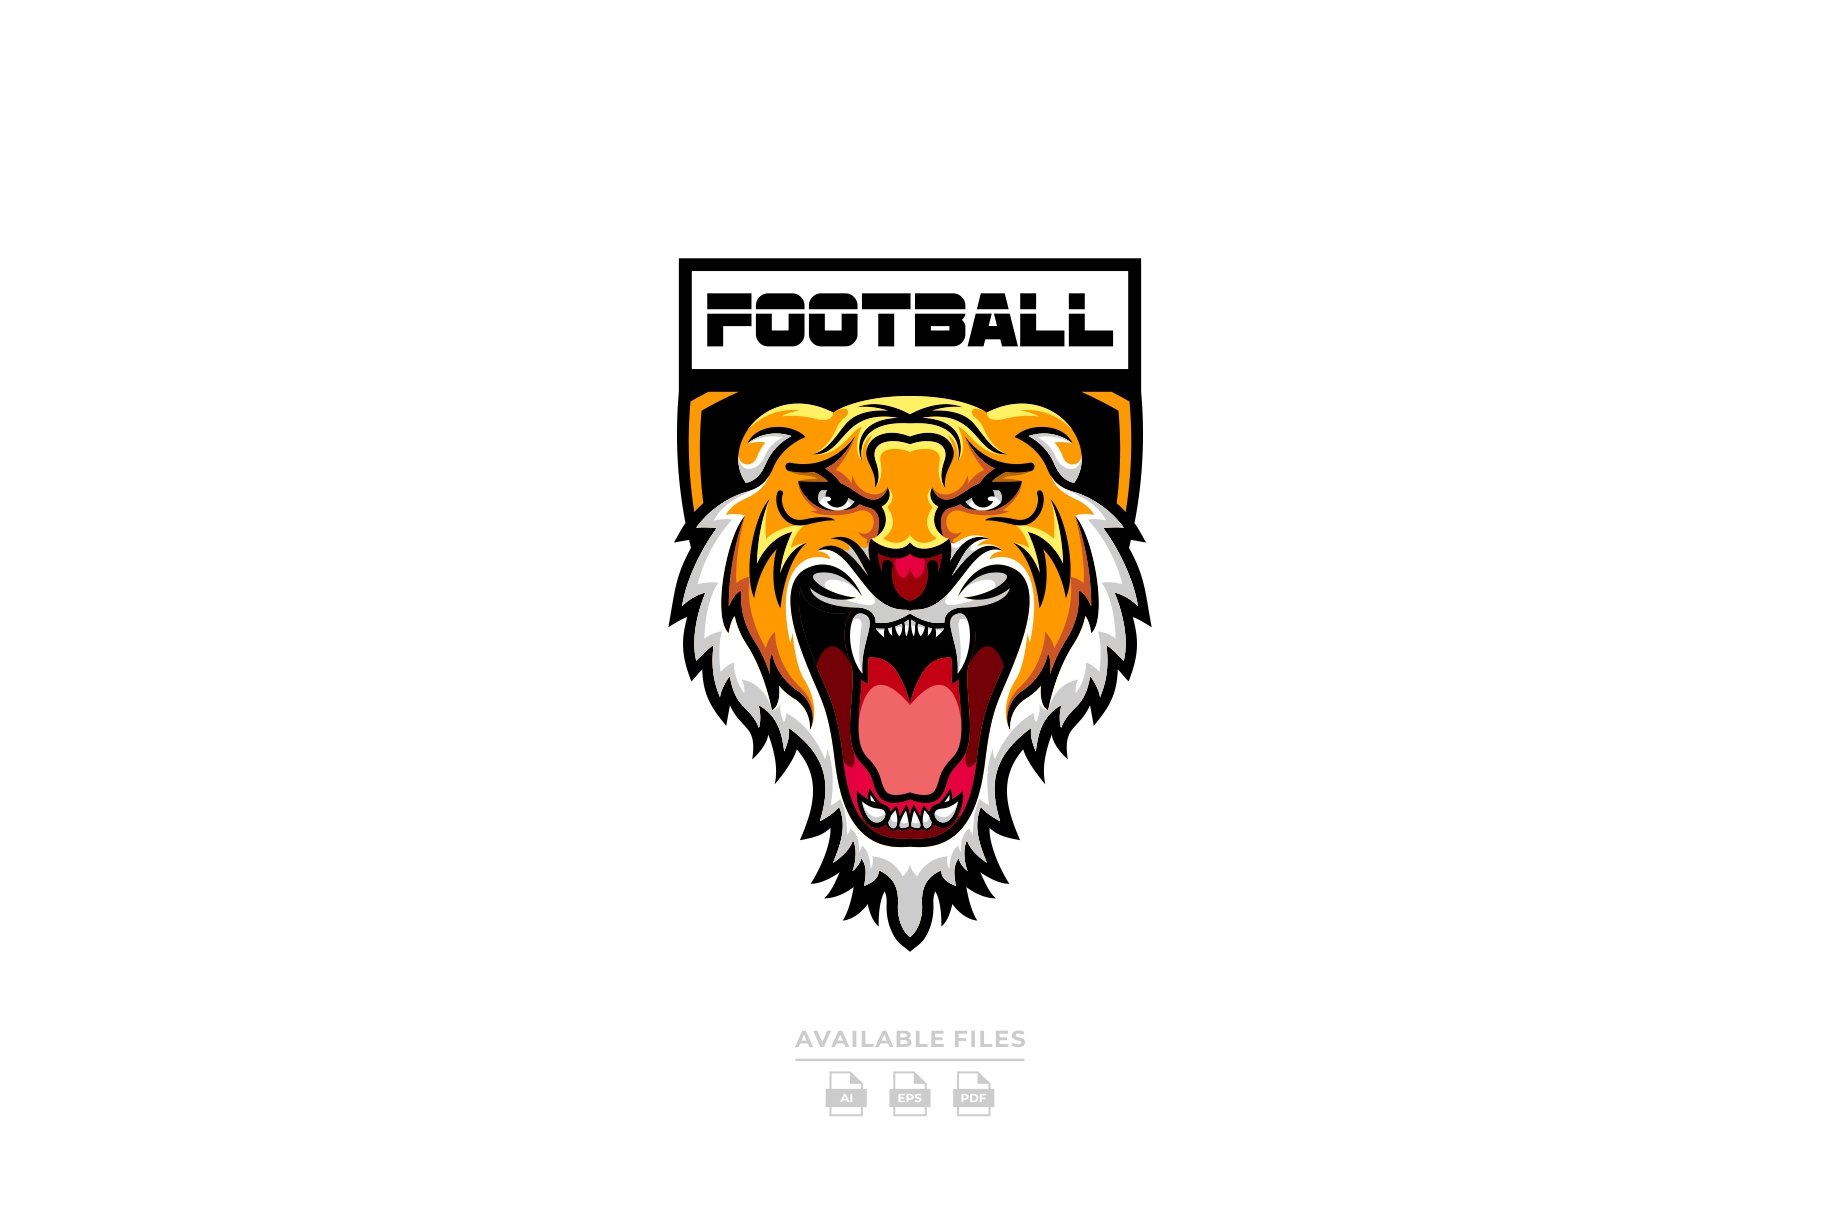 football tiger logo retro style cover image.